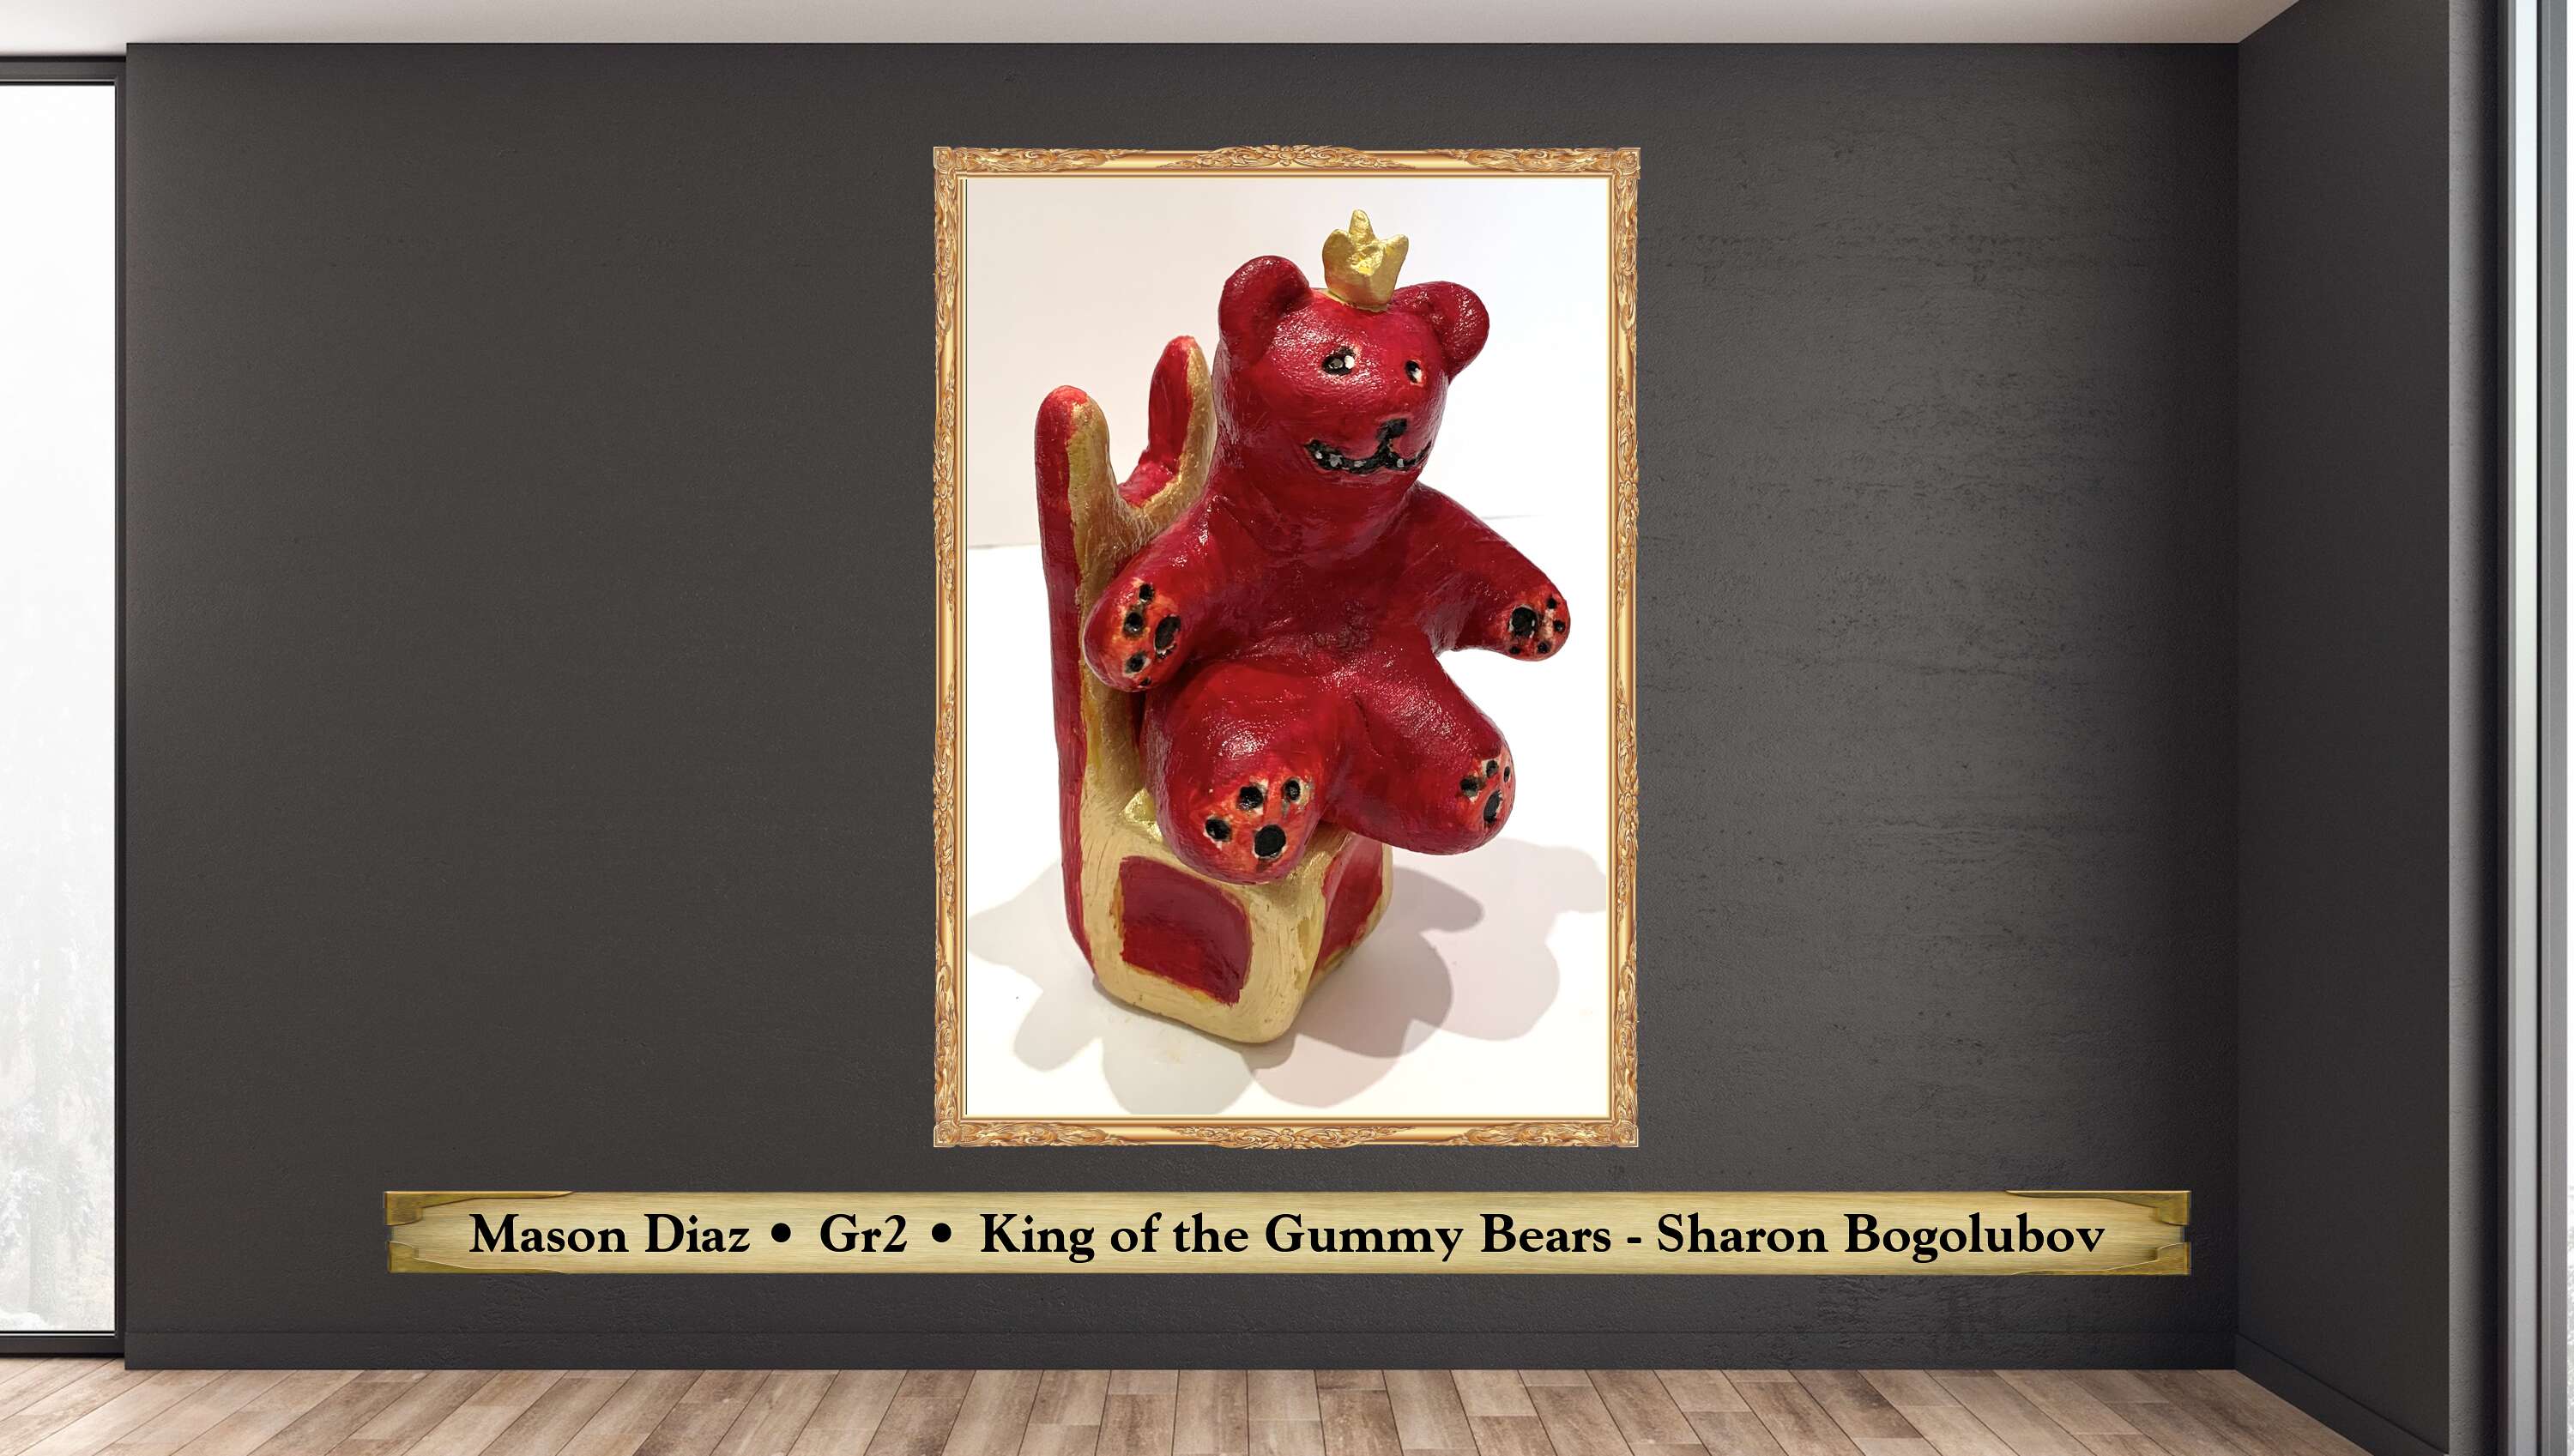 Mason Diaz • Gr2 • King of the Gummy Bears - Sharon Bogolubov